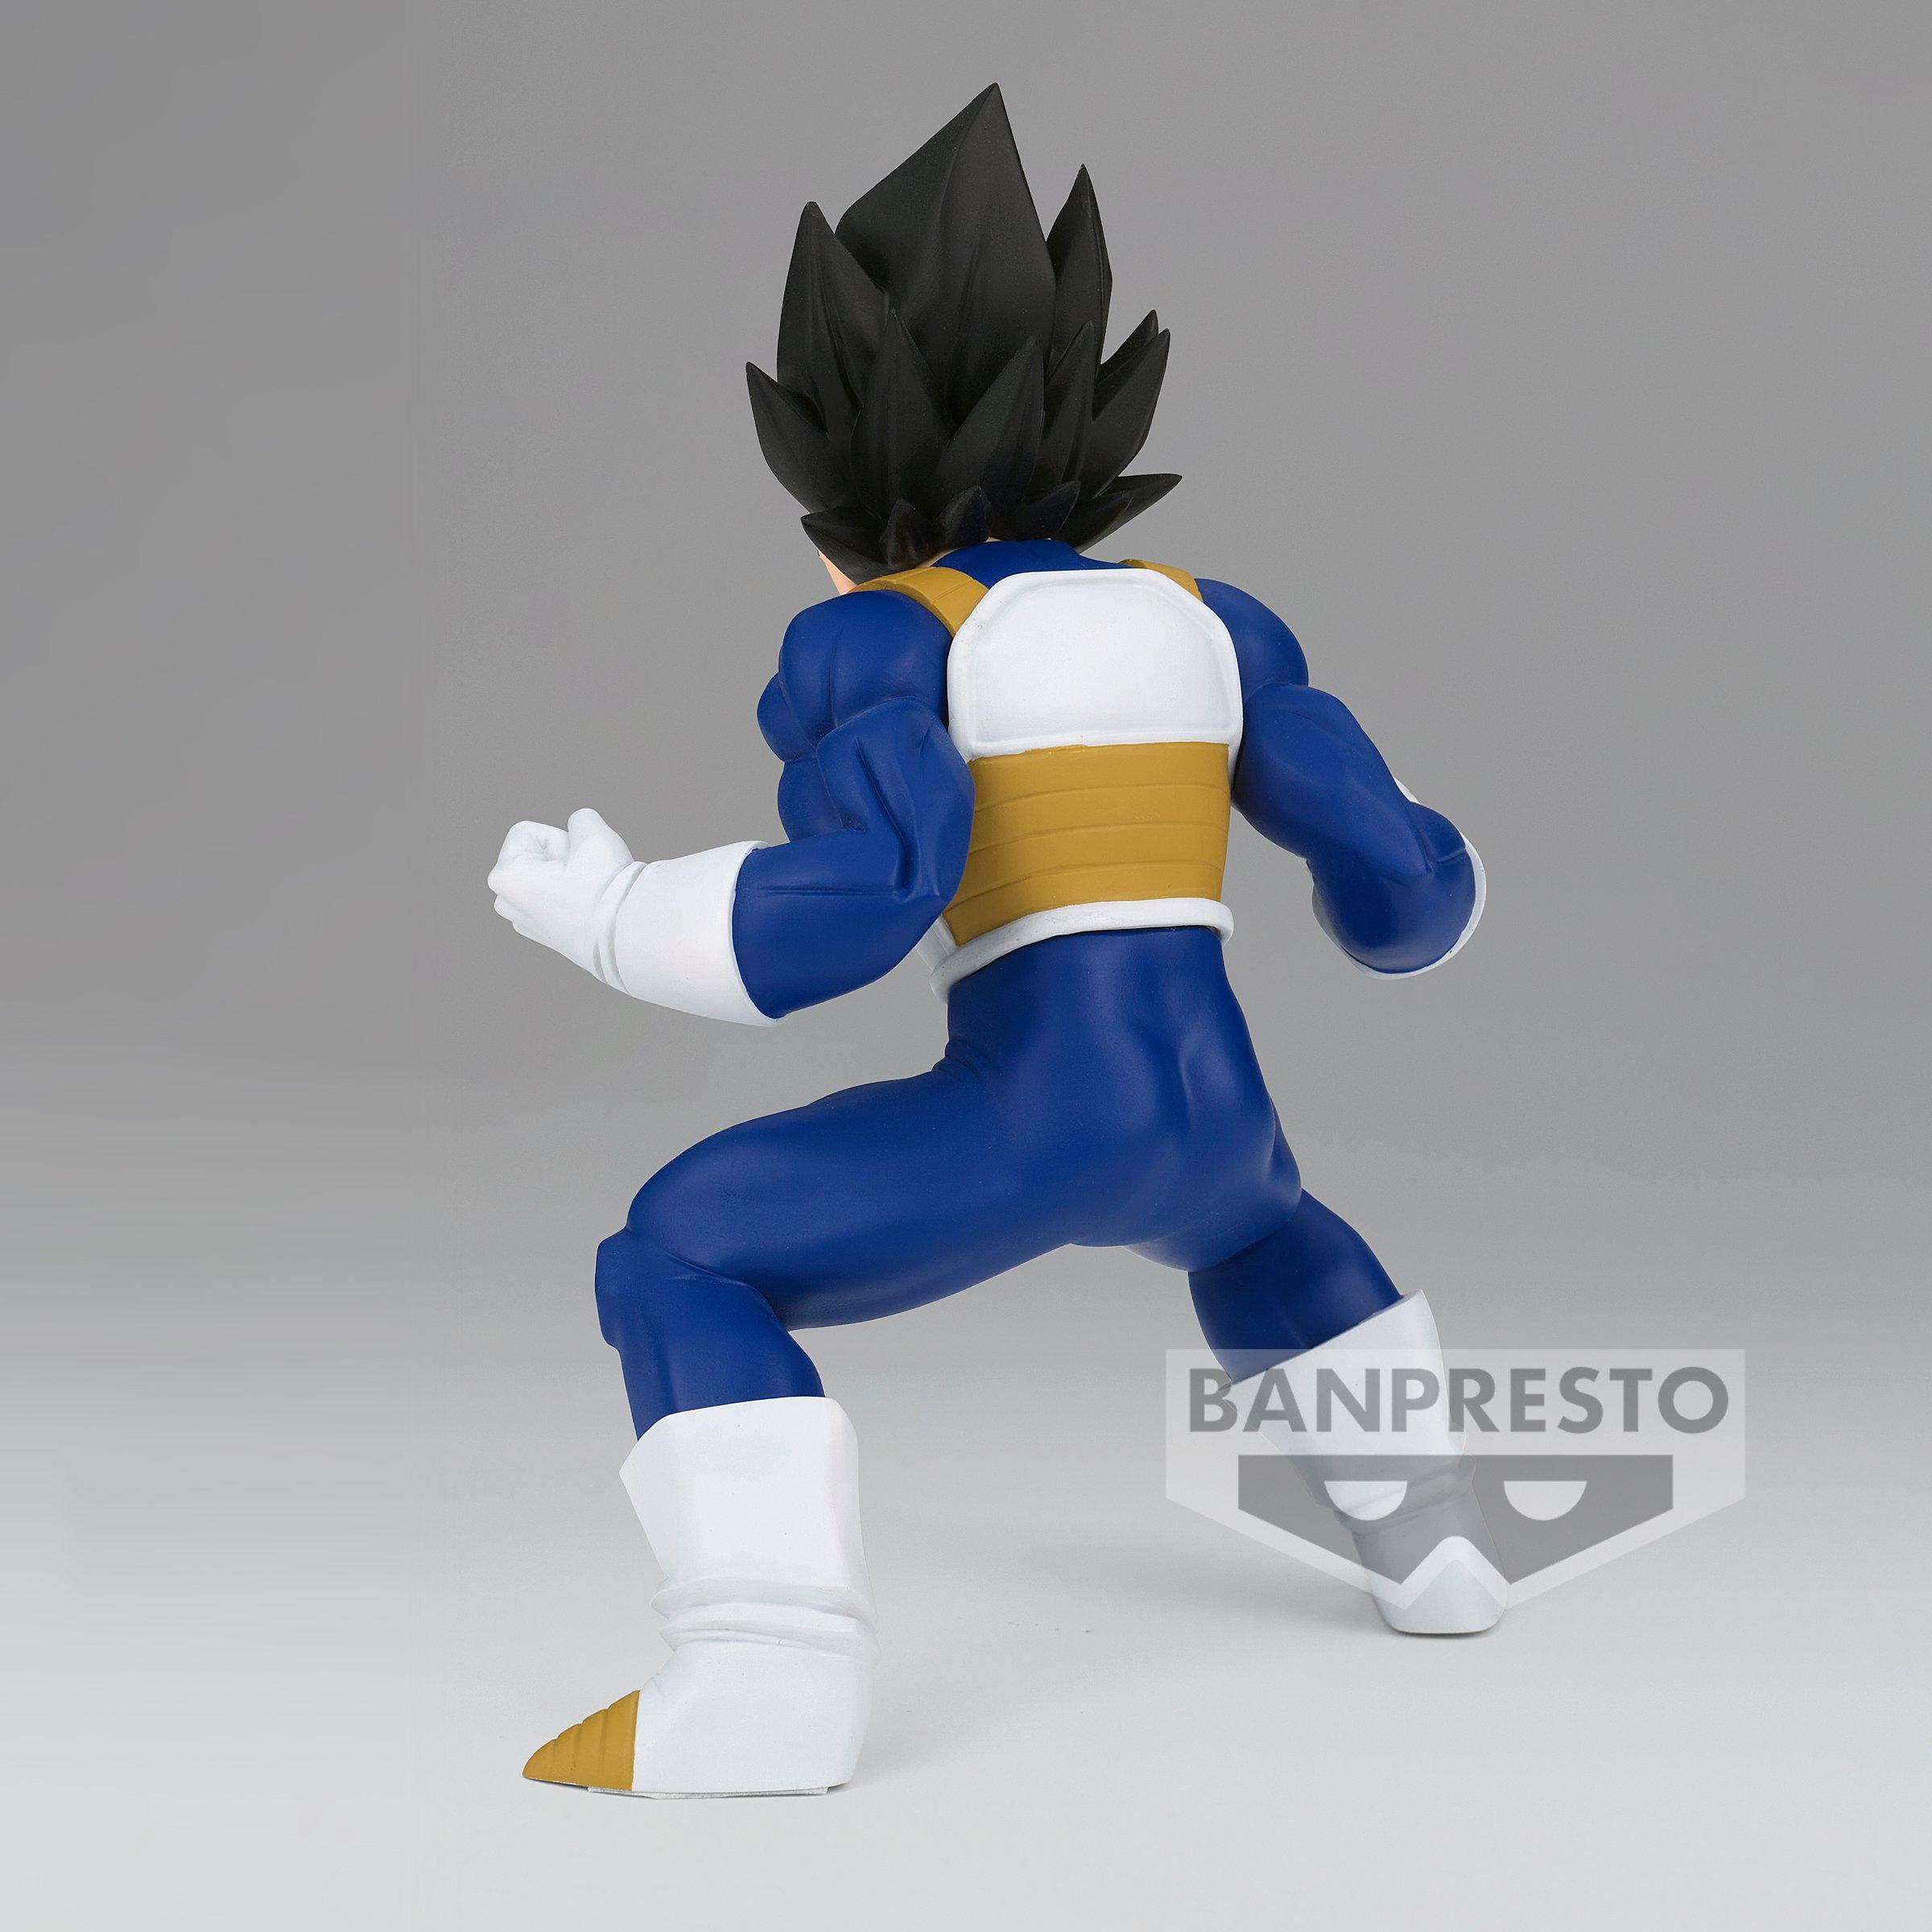 Banpresto  Static Figure - Chosenshiretsuden - Dragon Ball - Vegeta 